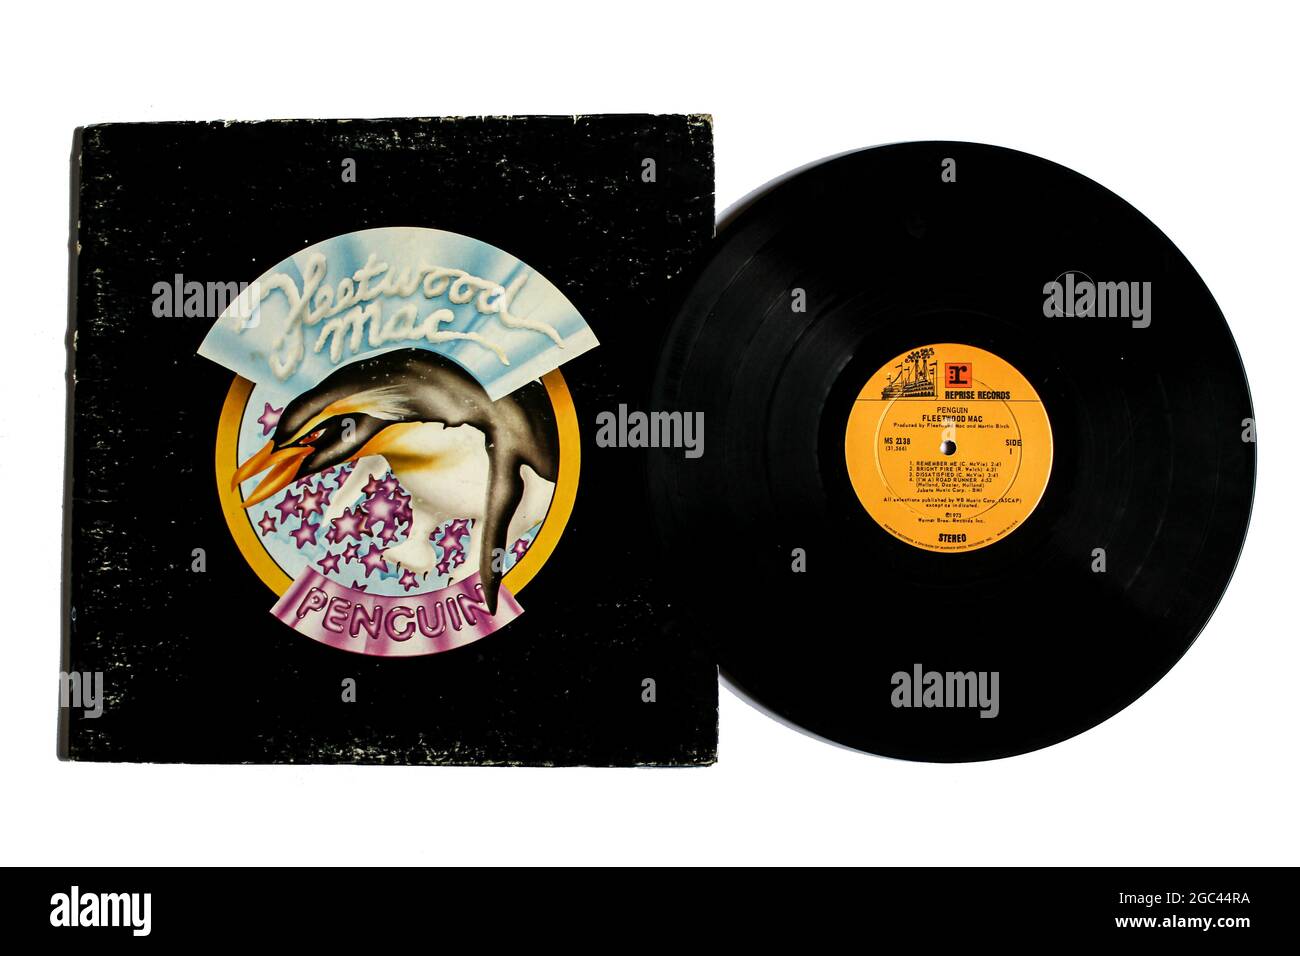 Rock and soft rock band, Fleetwood Mac music album on vinyl record LP disc. Titled: Penguin album cover Stock Photo